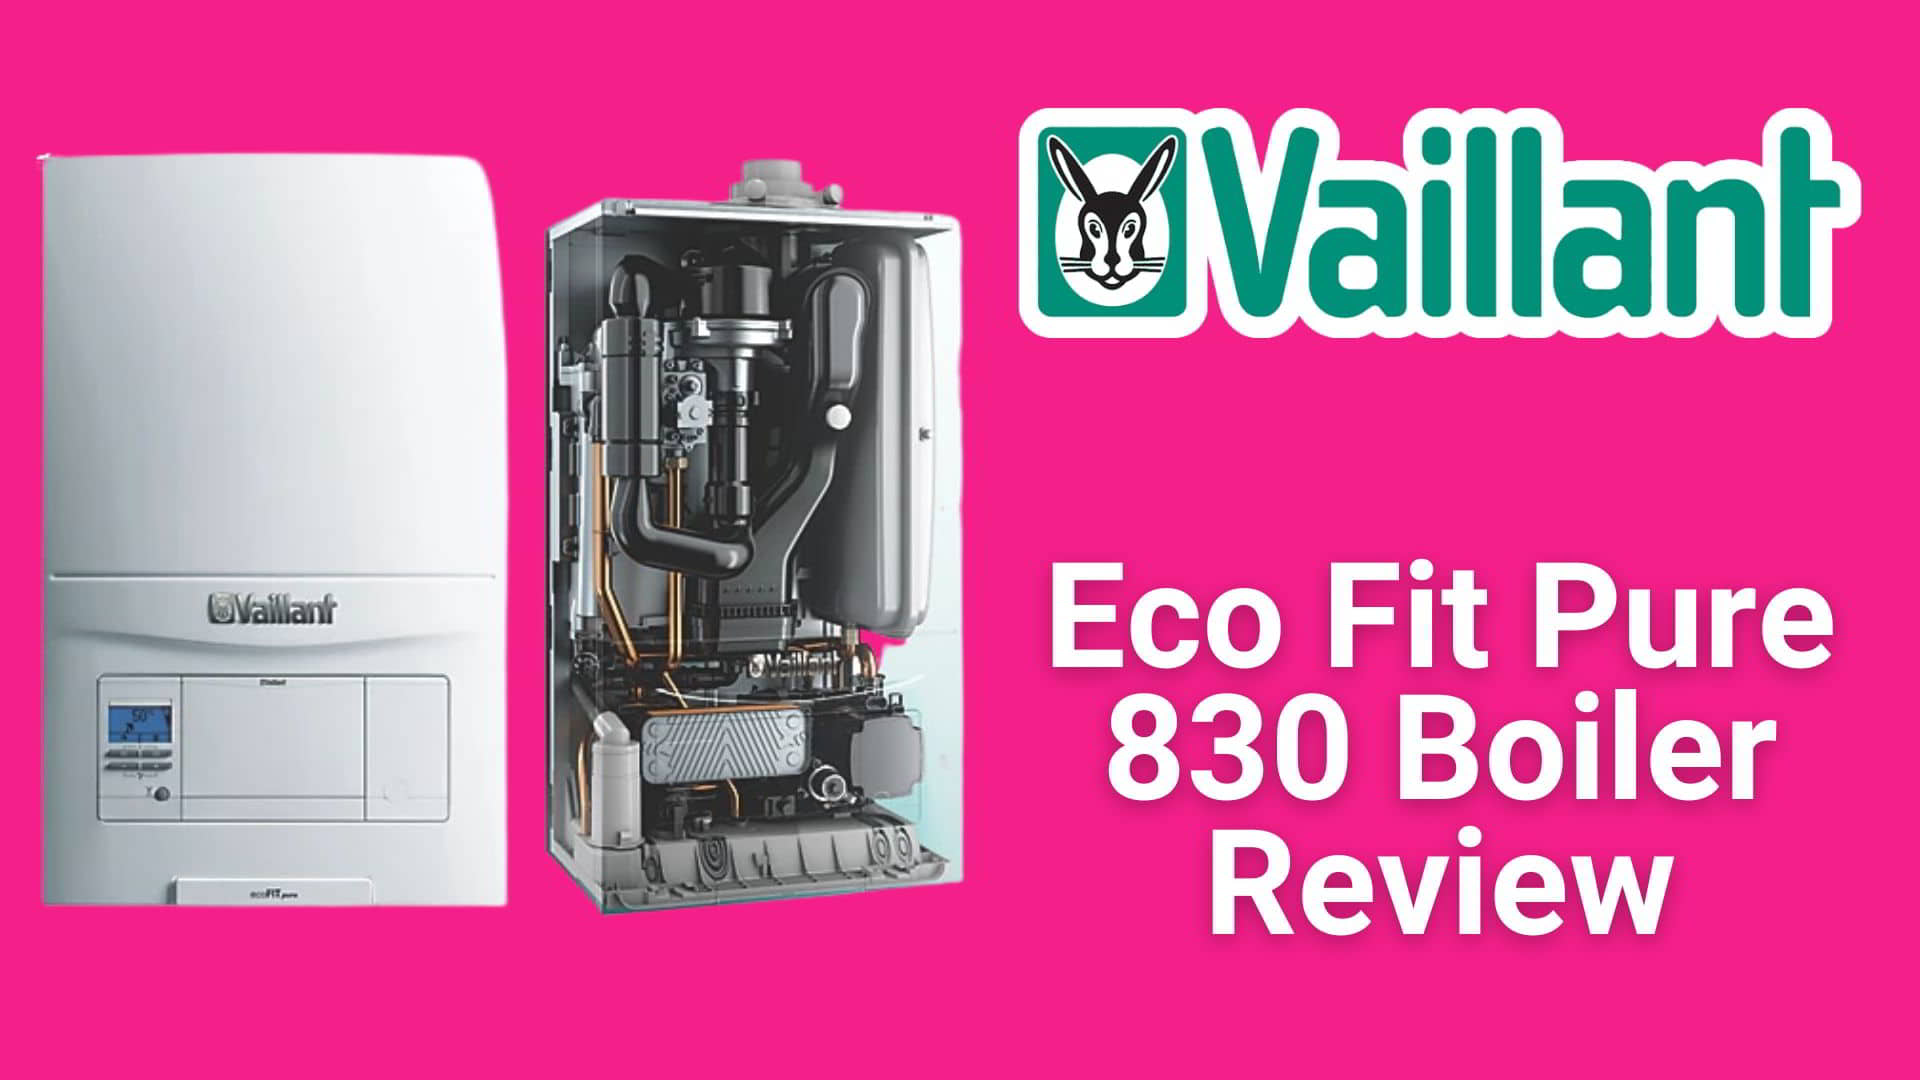 Vaillant Eco Fit Pure 830 Boiler